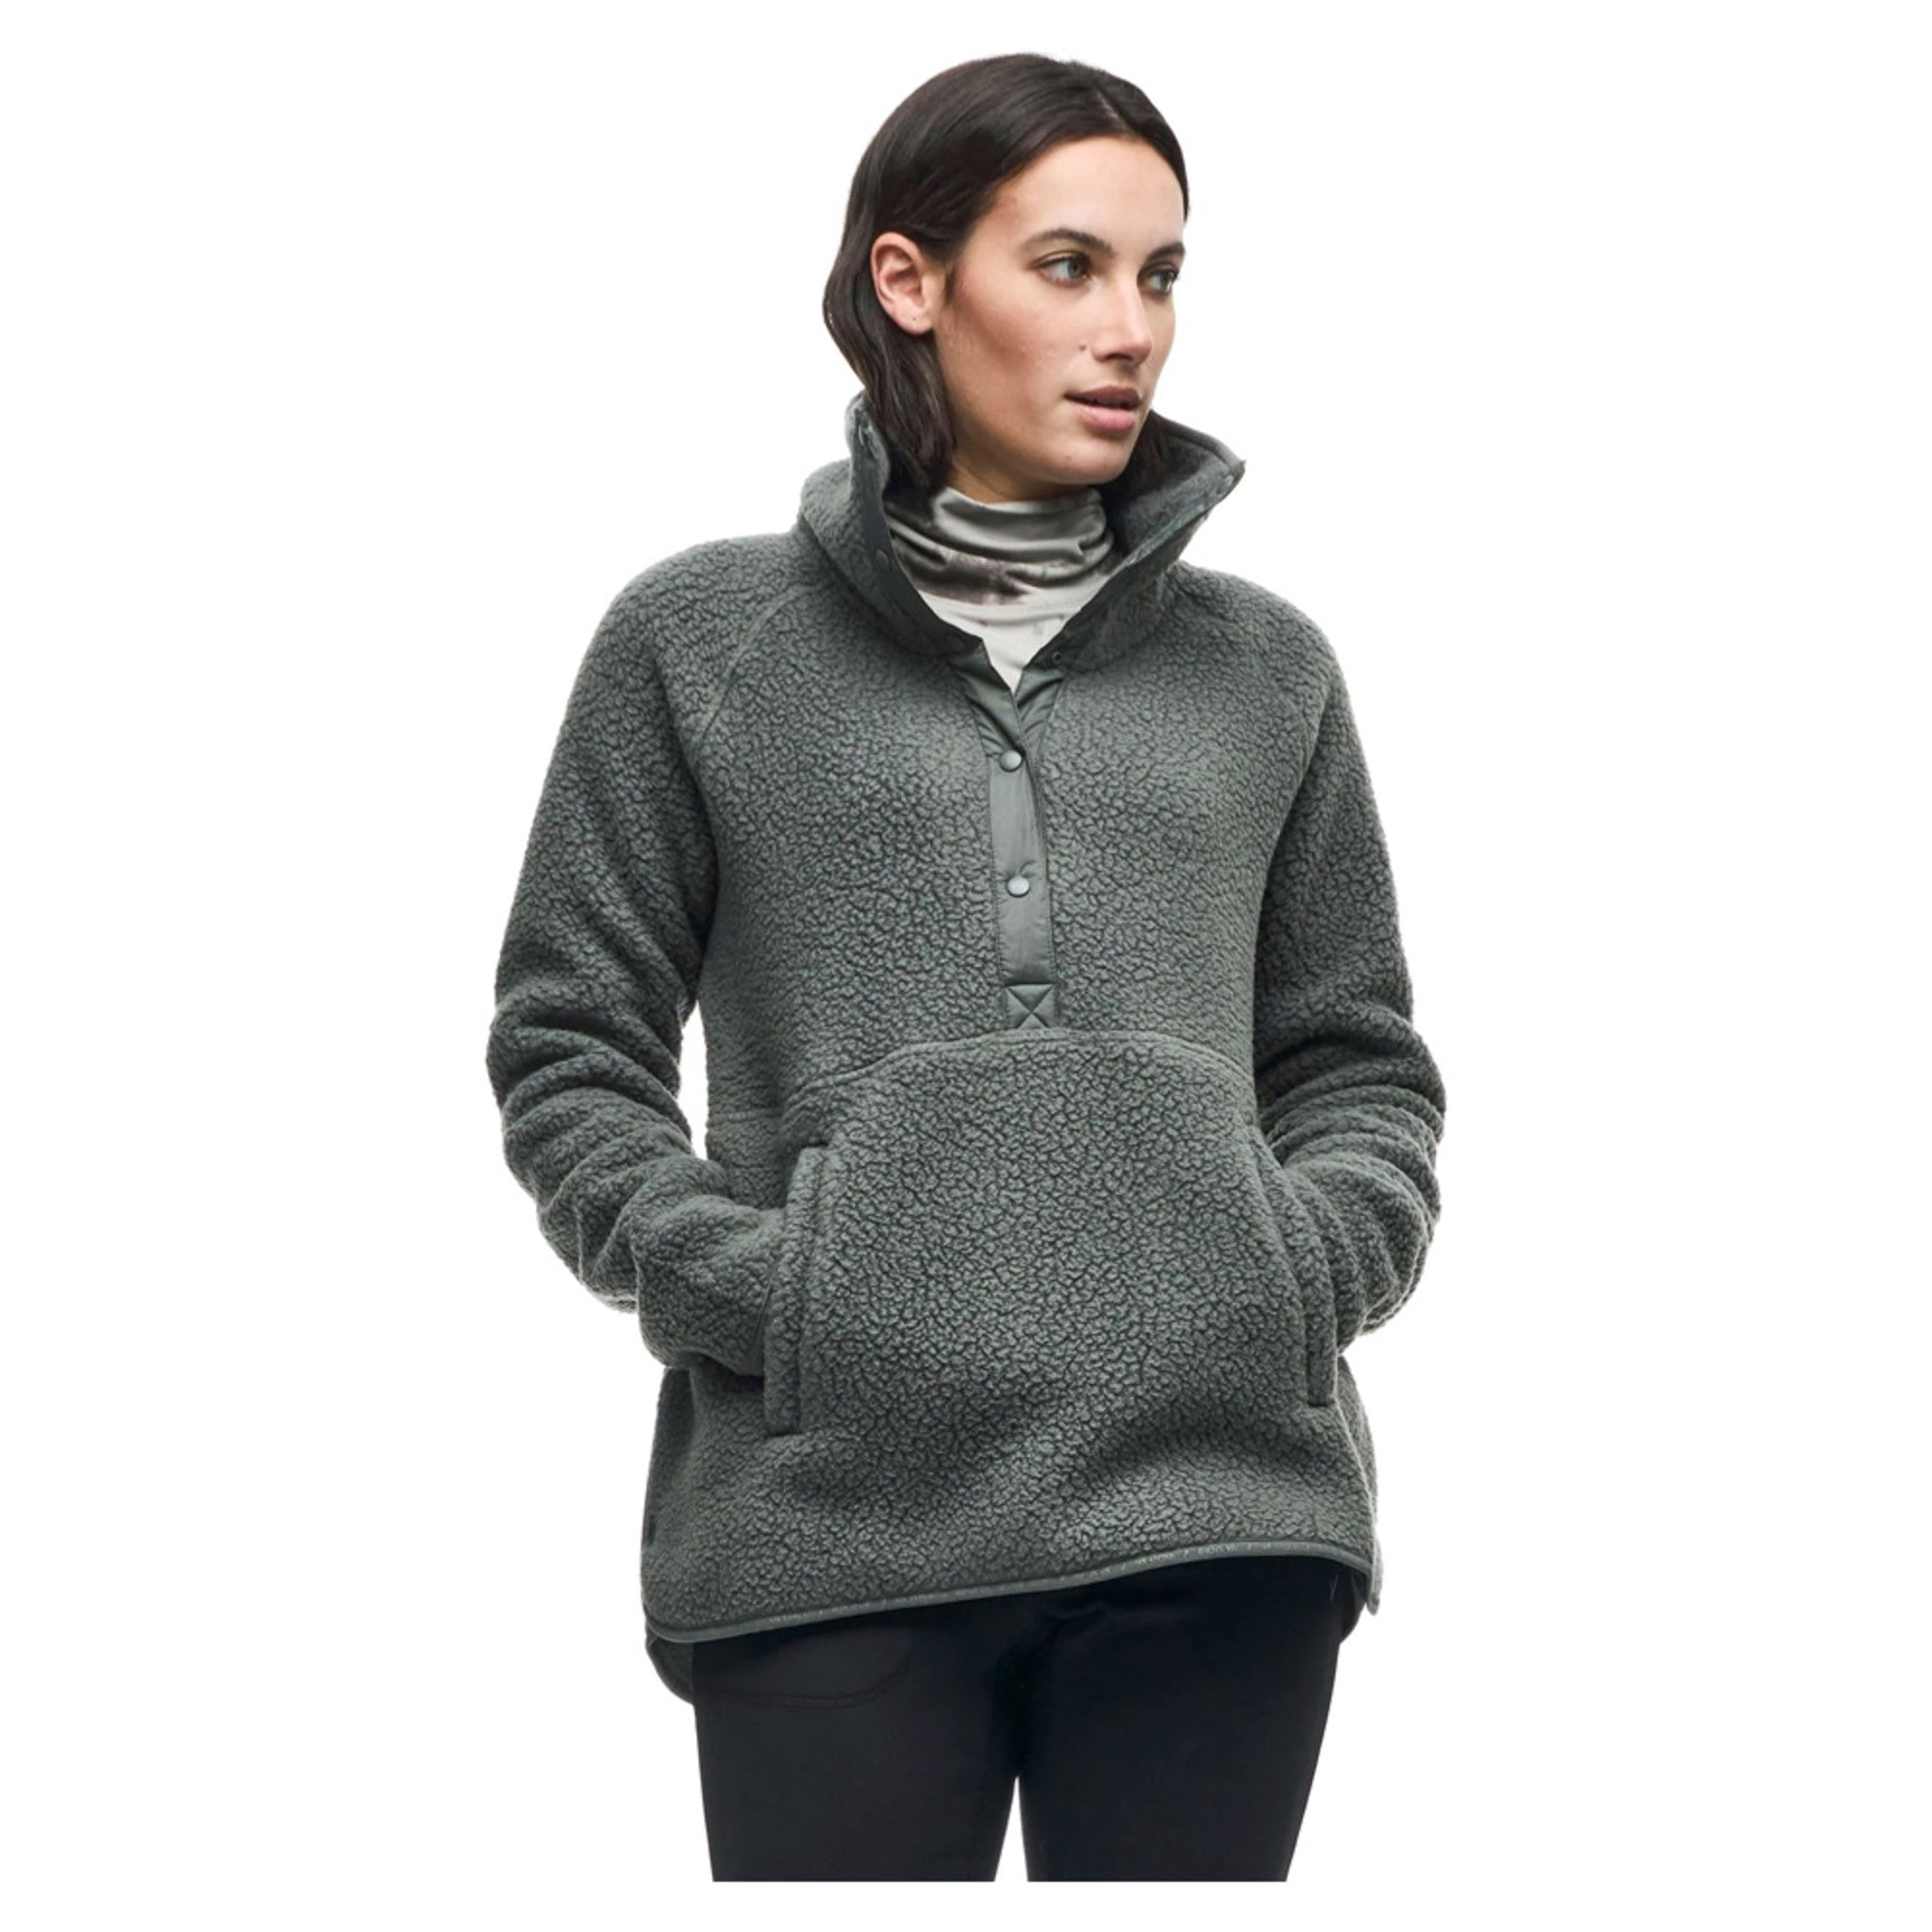 Indyeva Pecora Women's Polartec Fleece, Alpine / Apparel